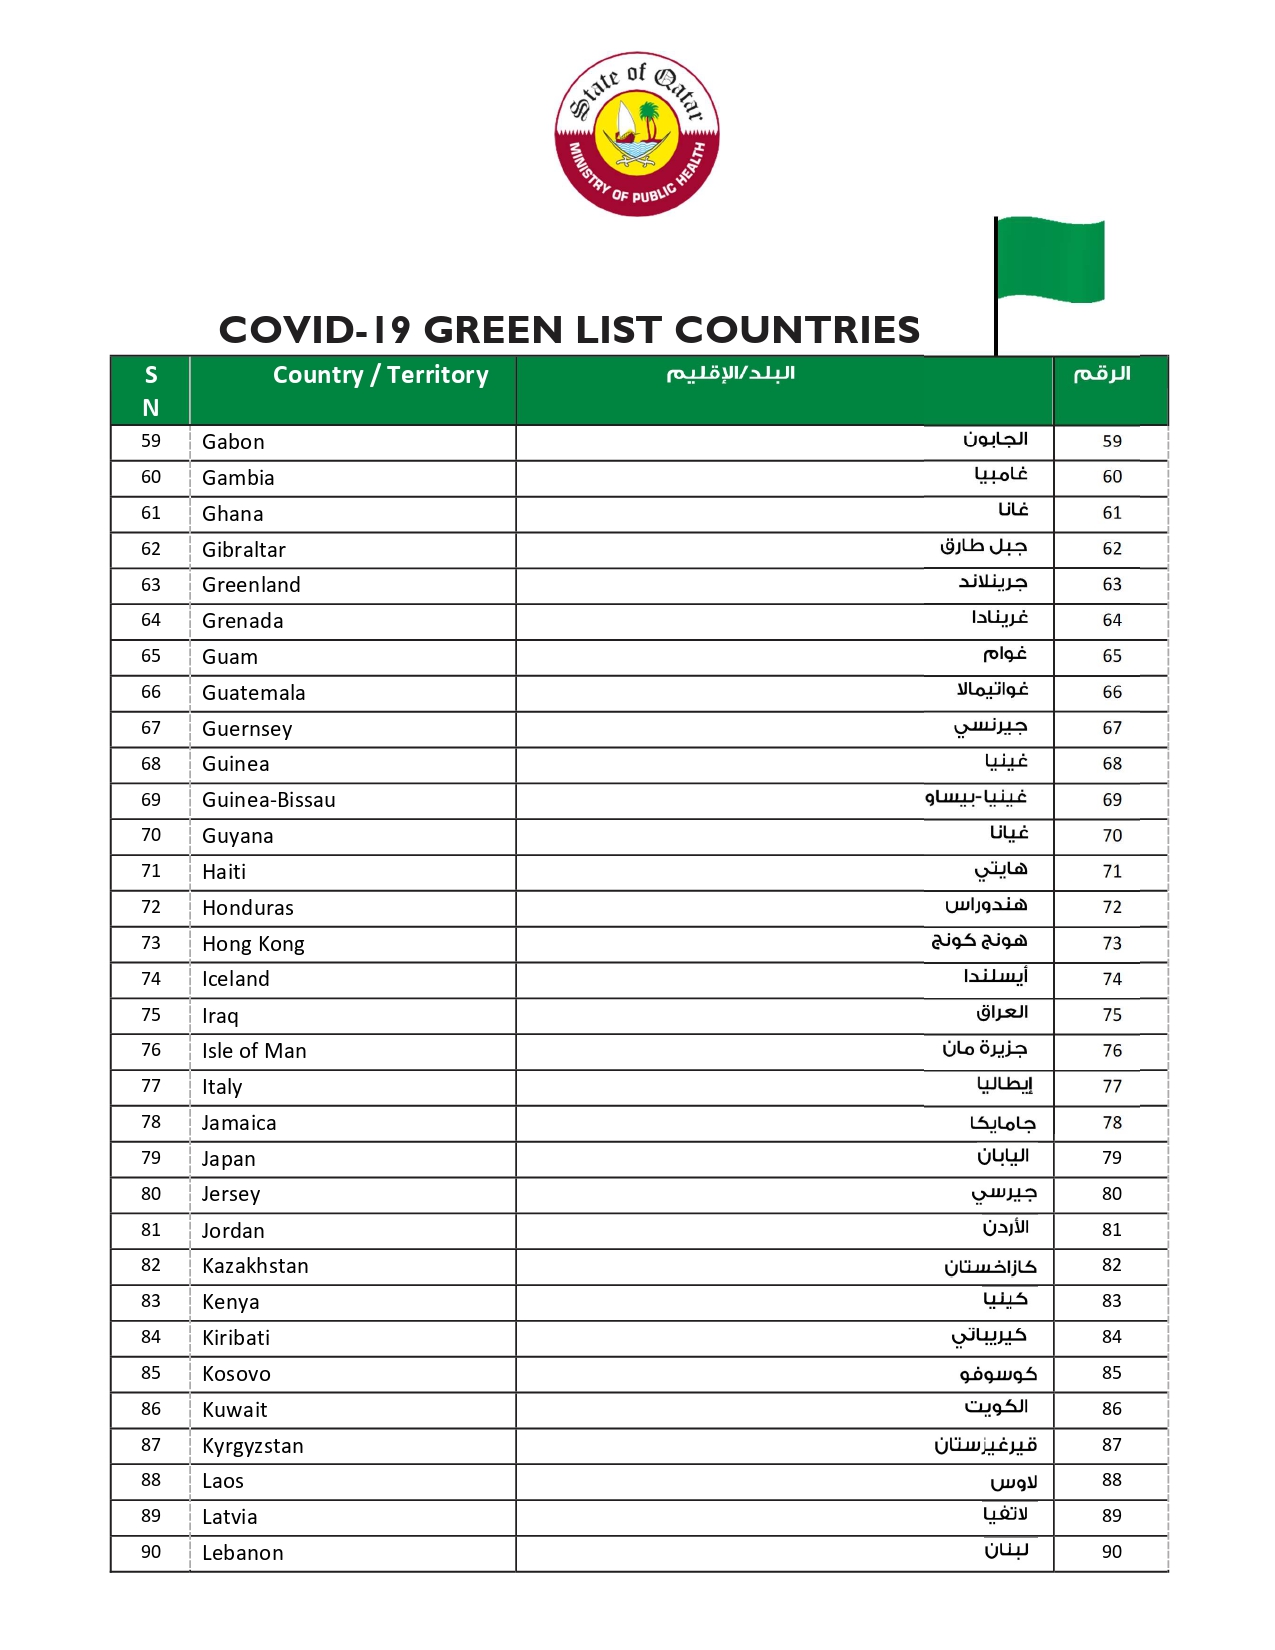 Green list countries